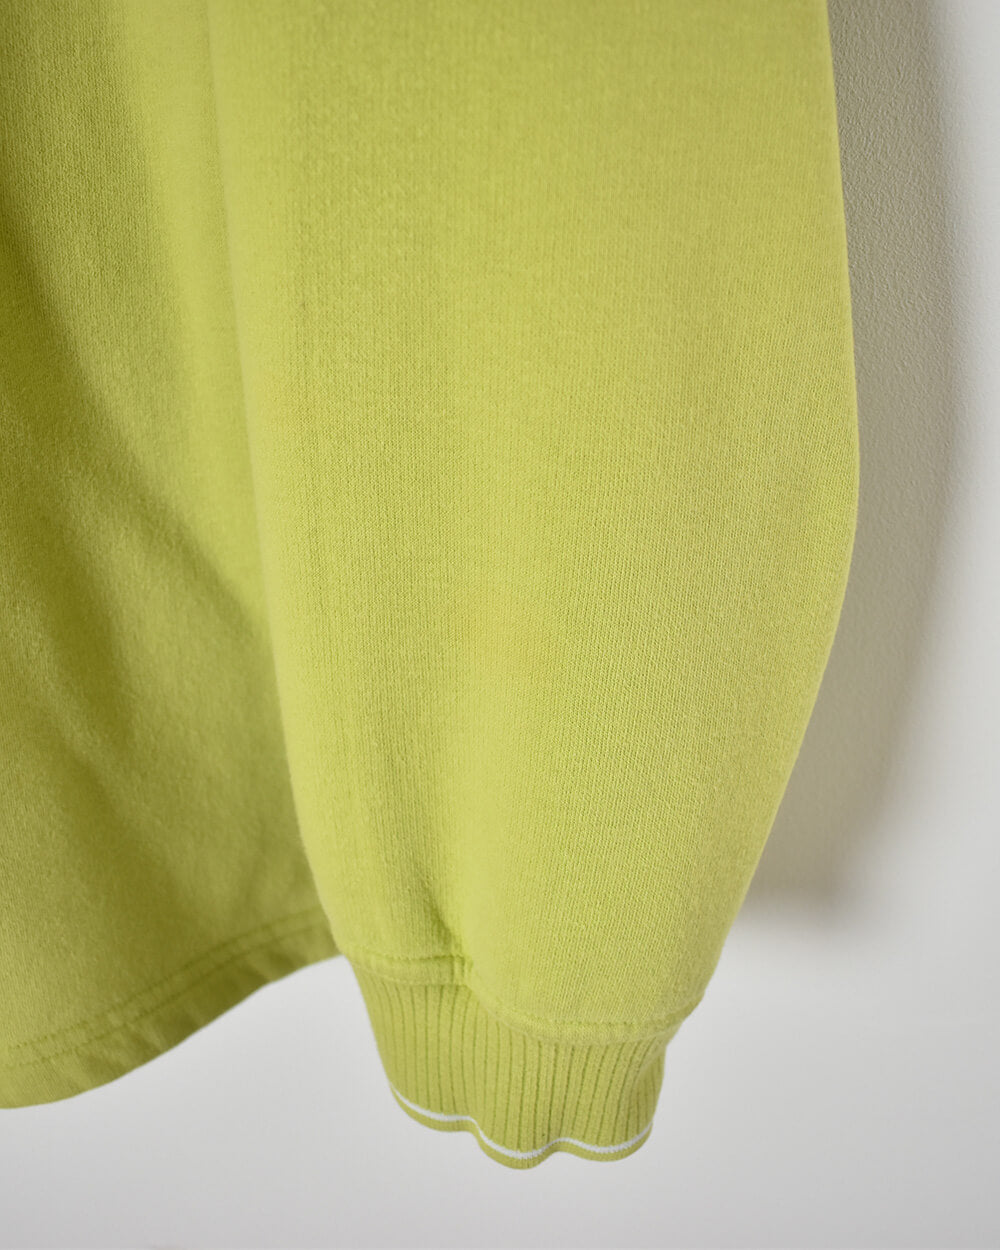 Adidas 1/4 Zip Sweatshirt - Medium - Domno Vintage